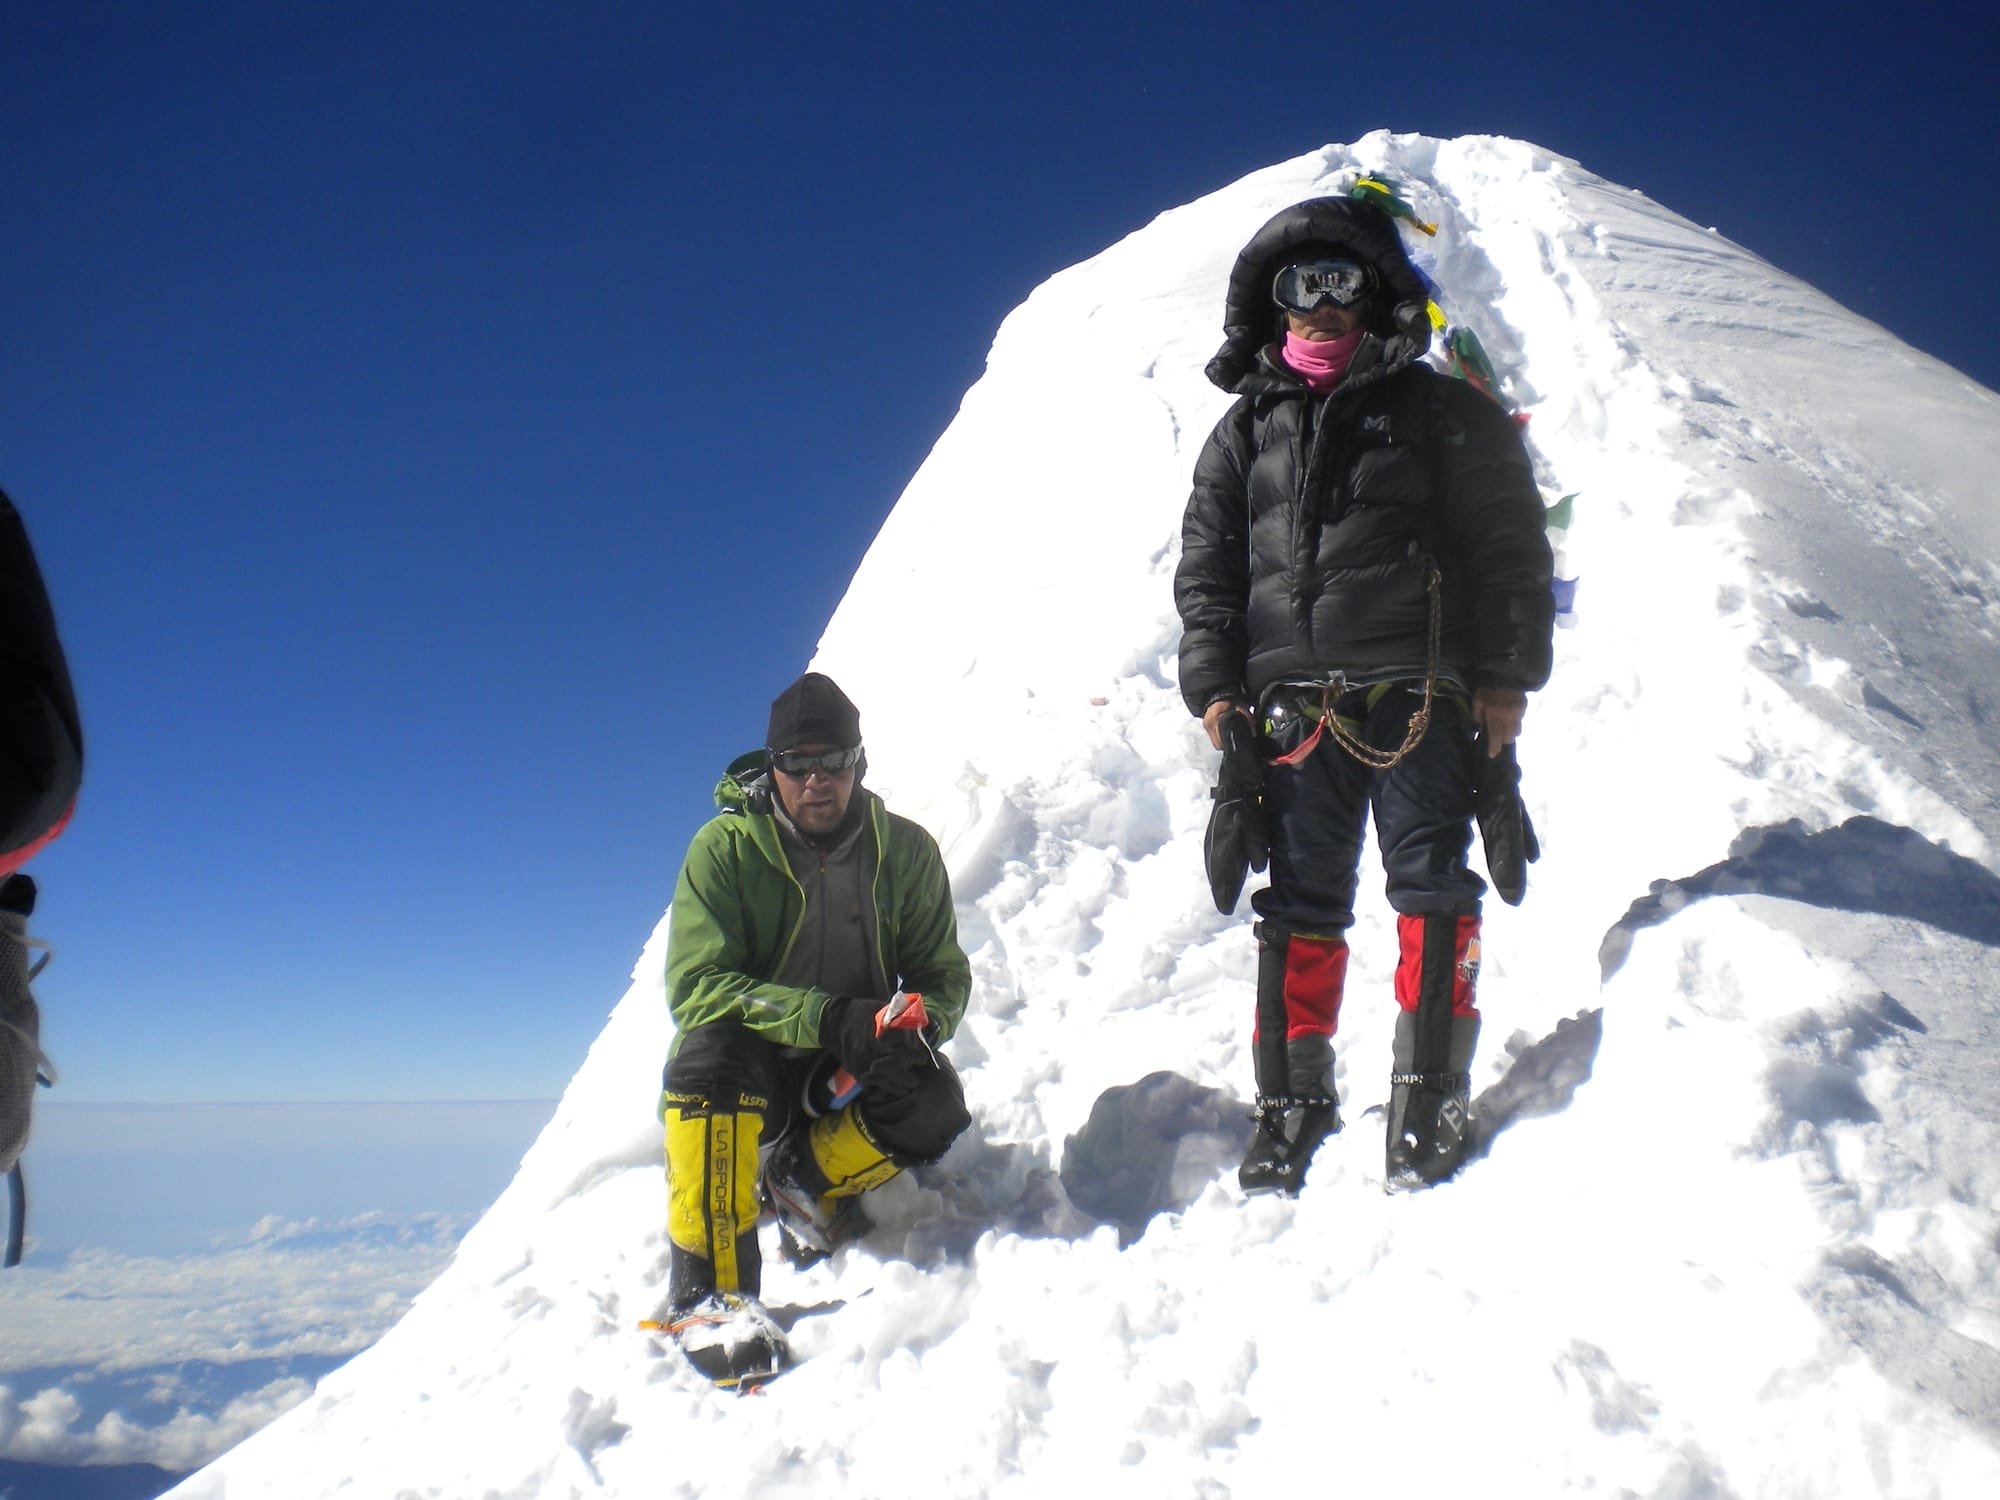 Manaslu climbing expedition 8163- 2016